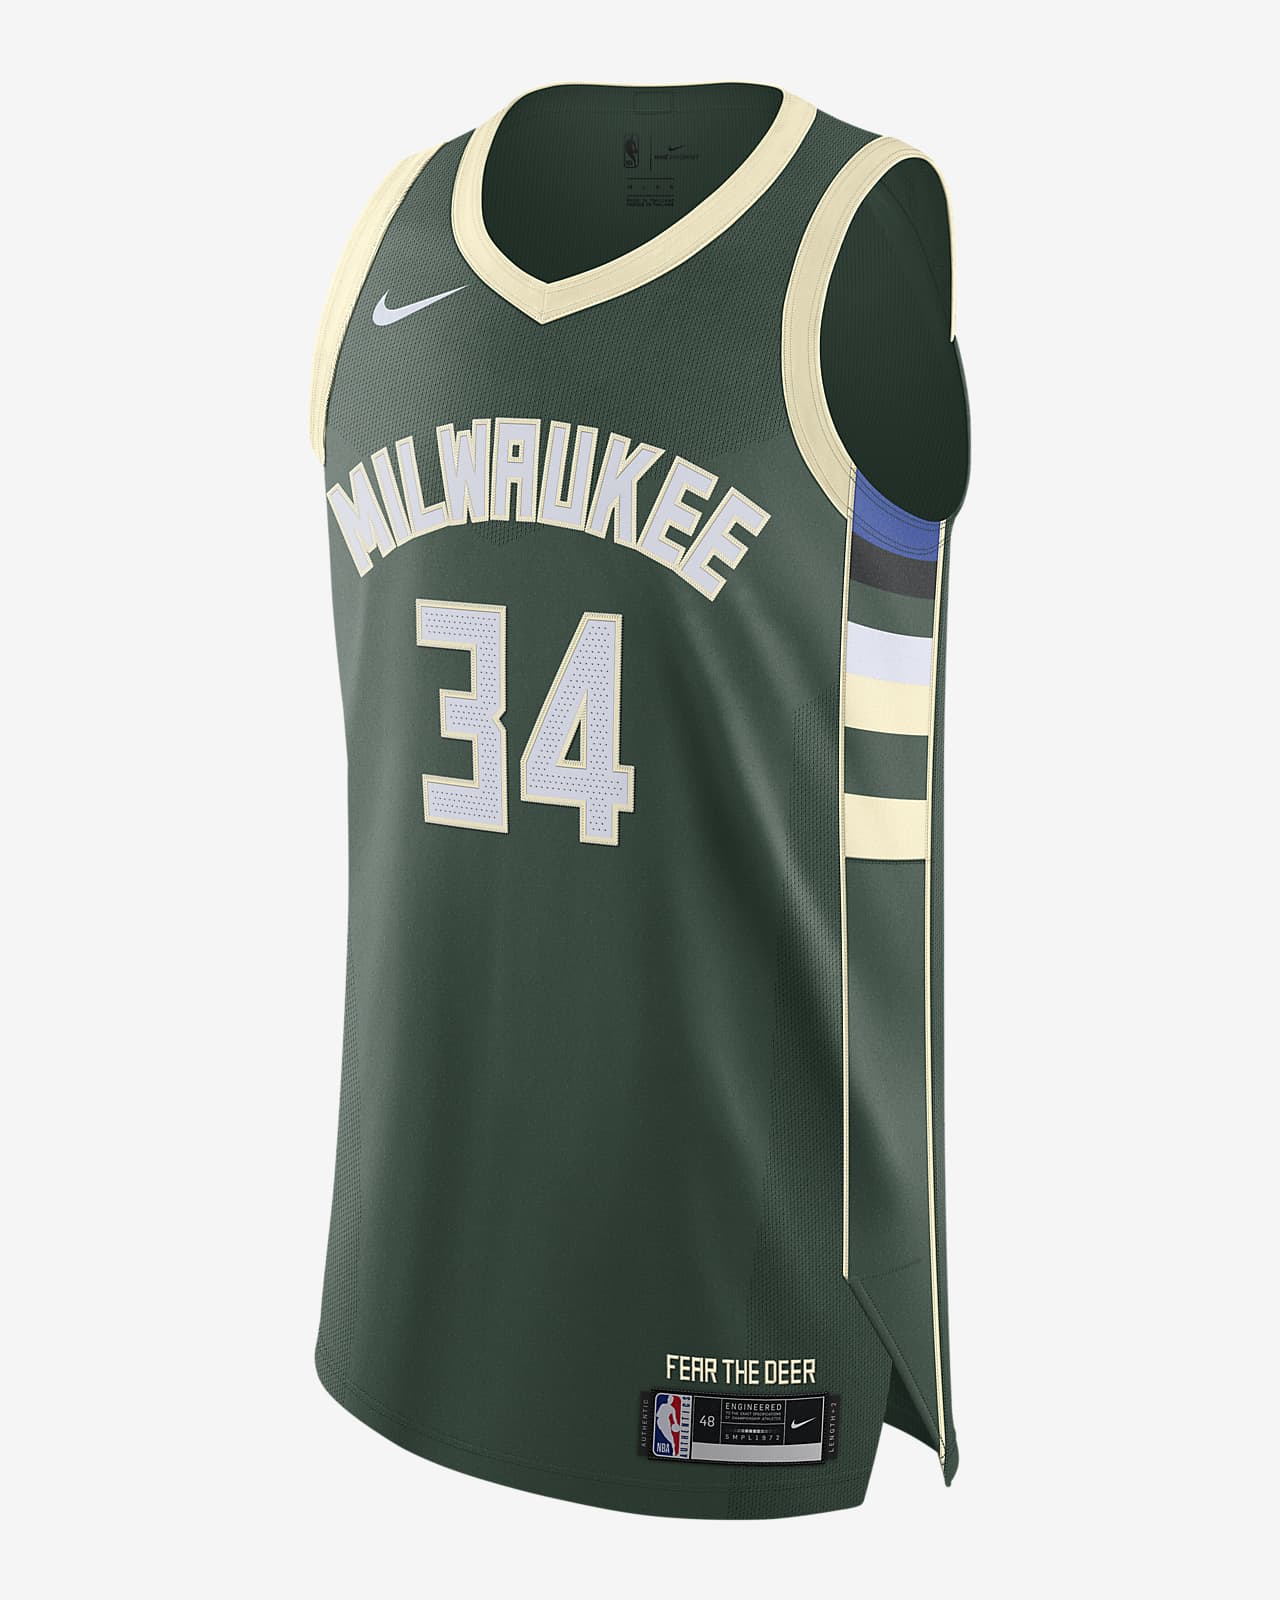 Giannis Antetokounmpo Bucks Edition 2020 Nike NBA Authentic Jersey. LU